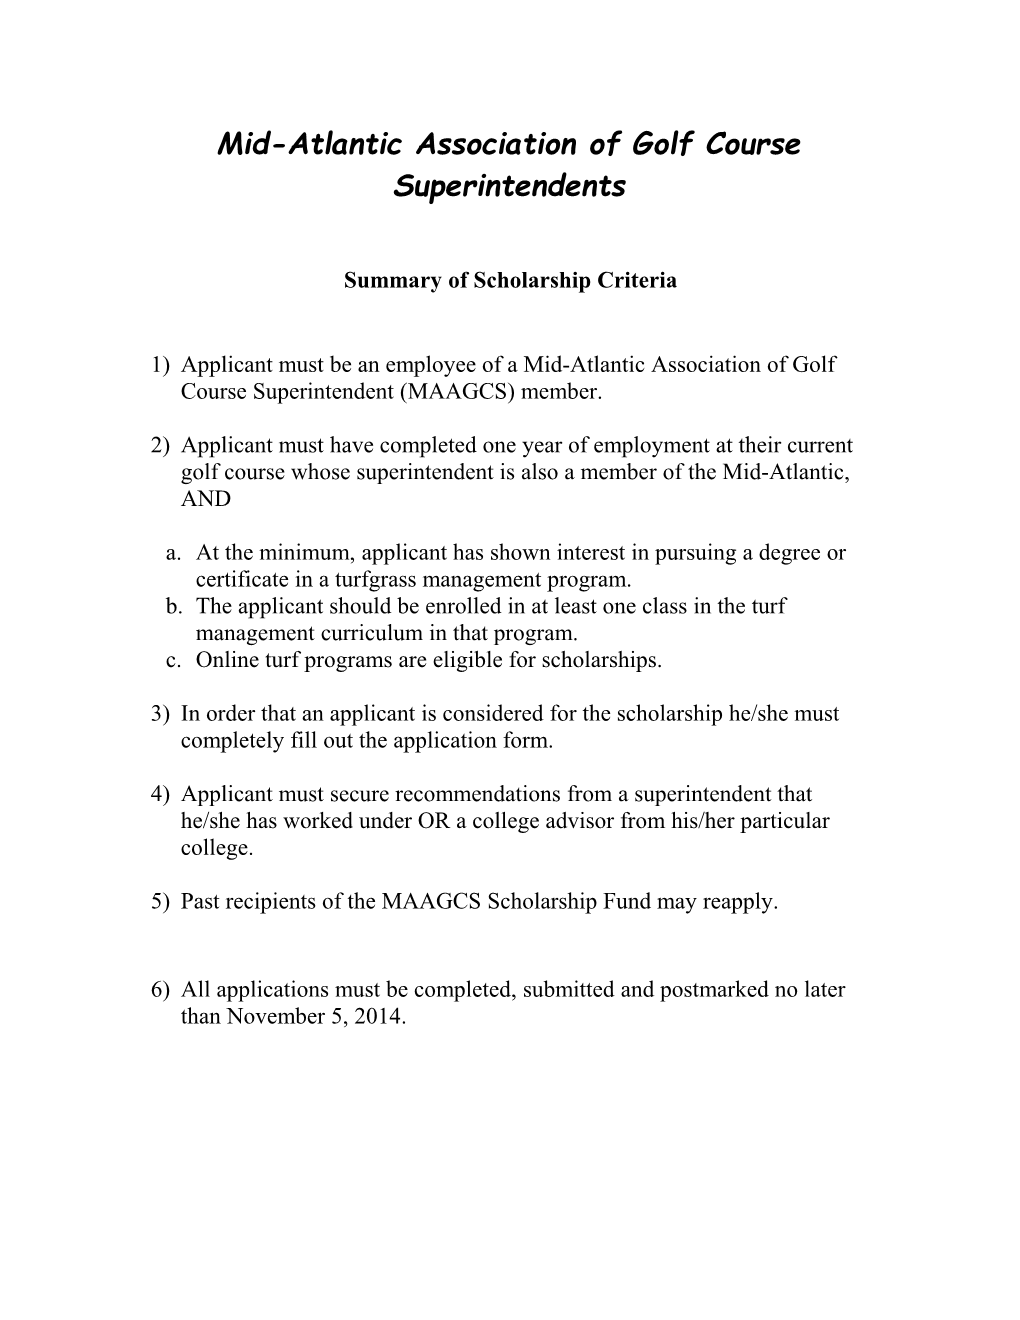 Mid-Atlantic Association of Golf Course Superintendents